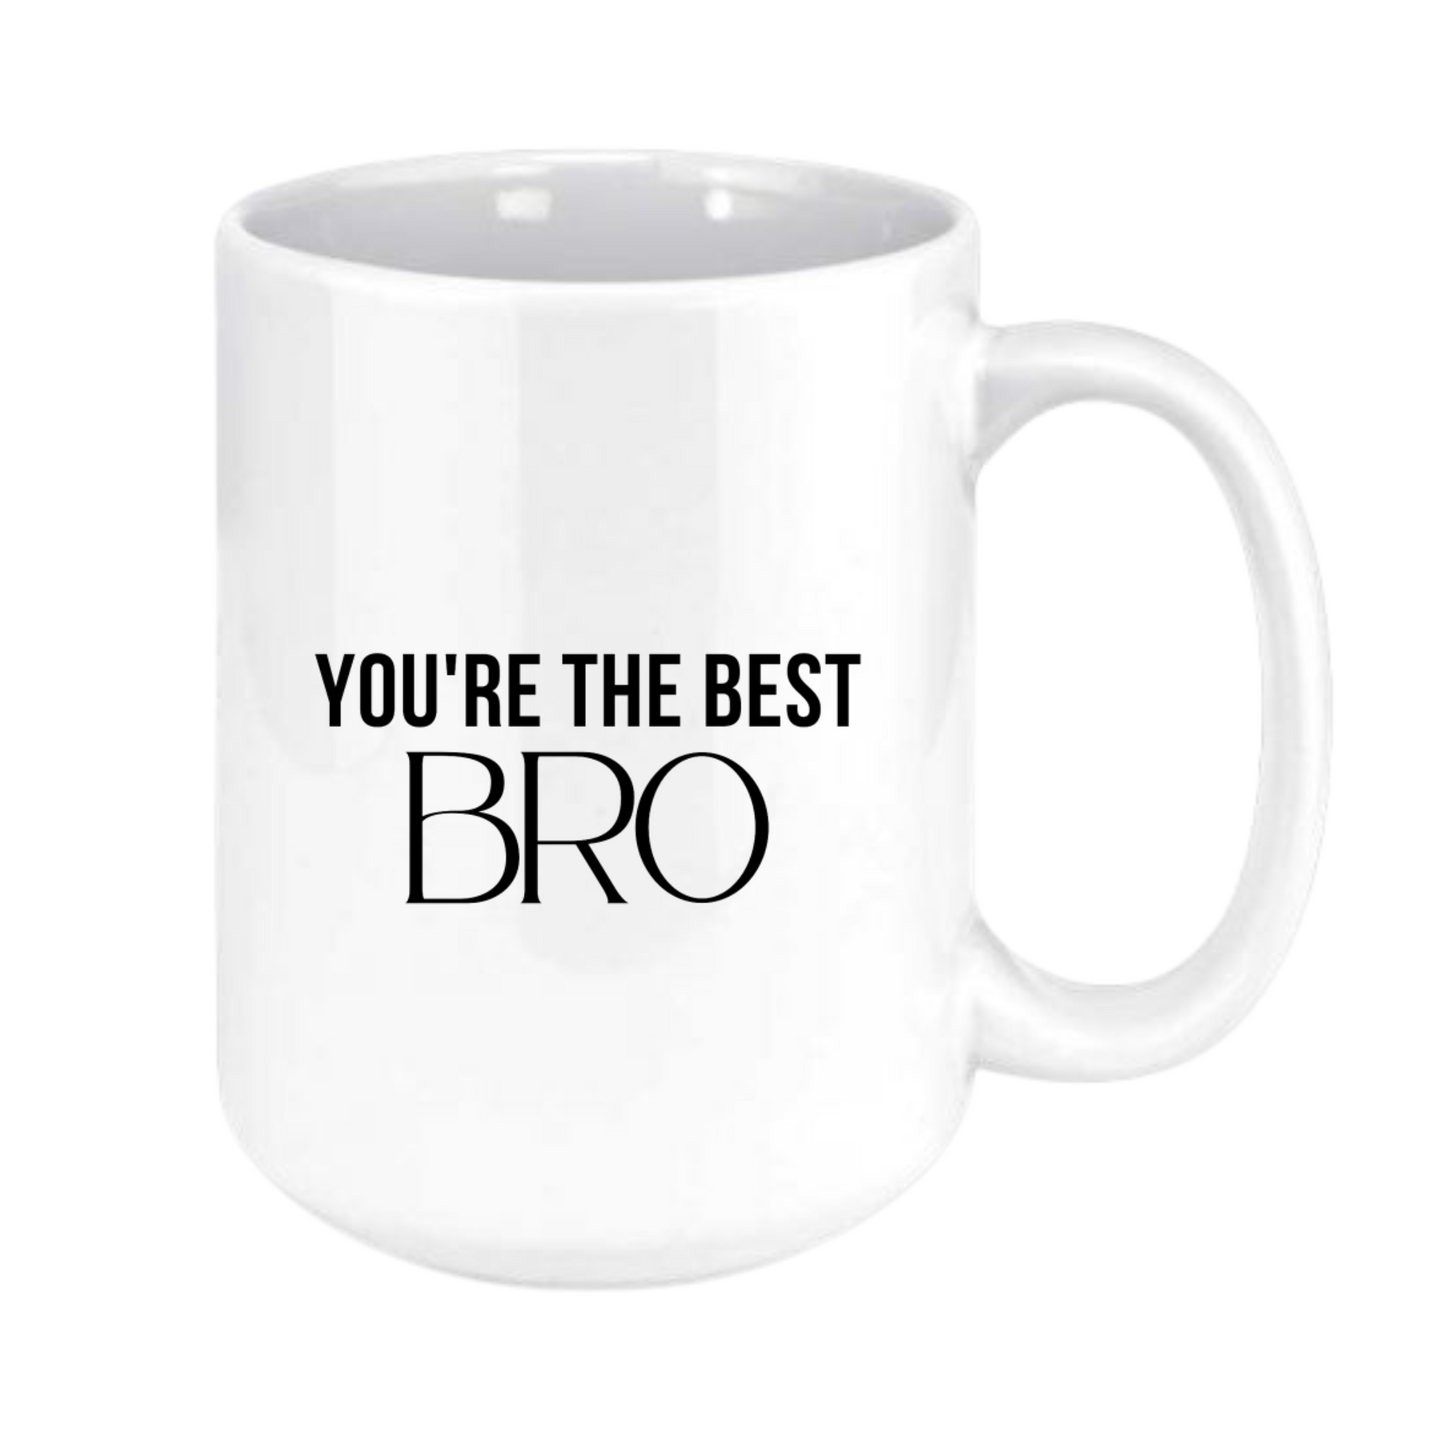 you’re the best bro mug